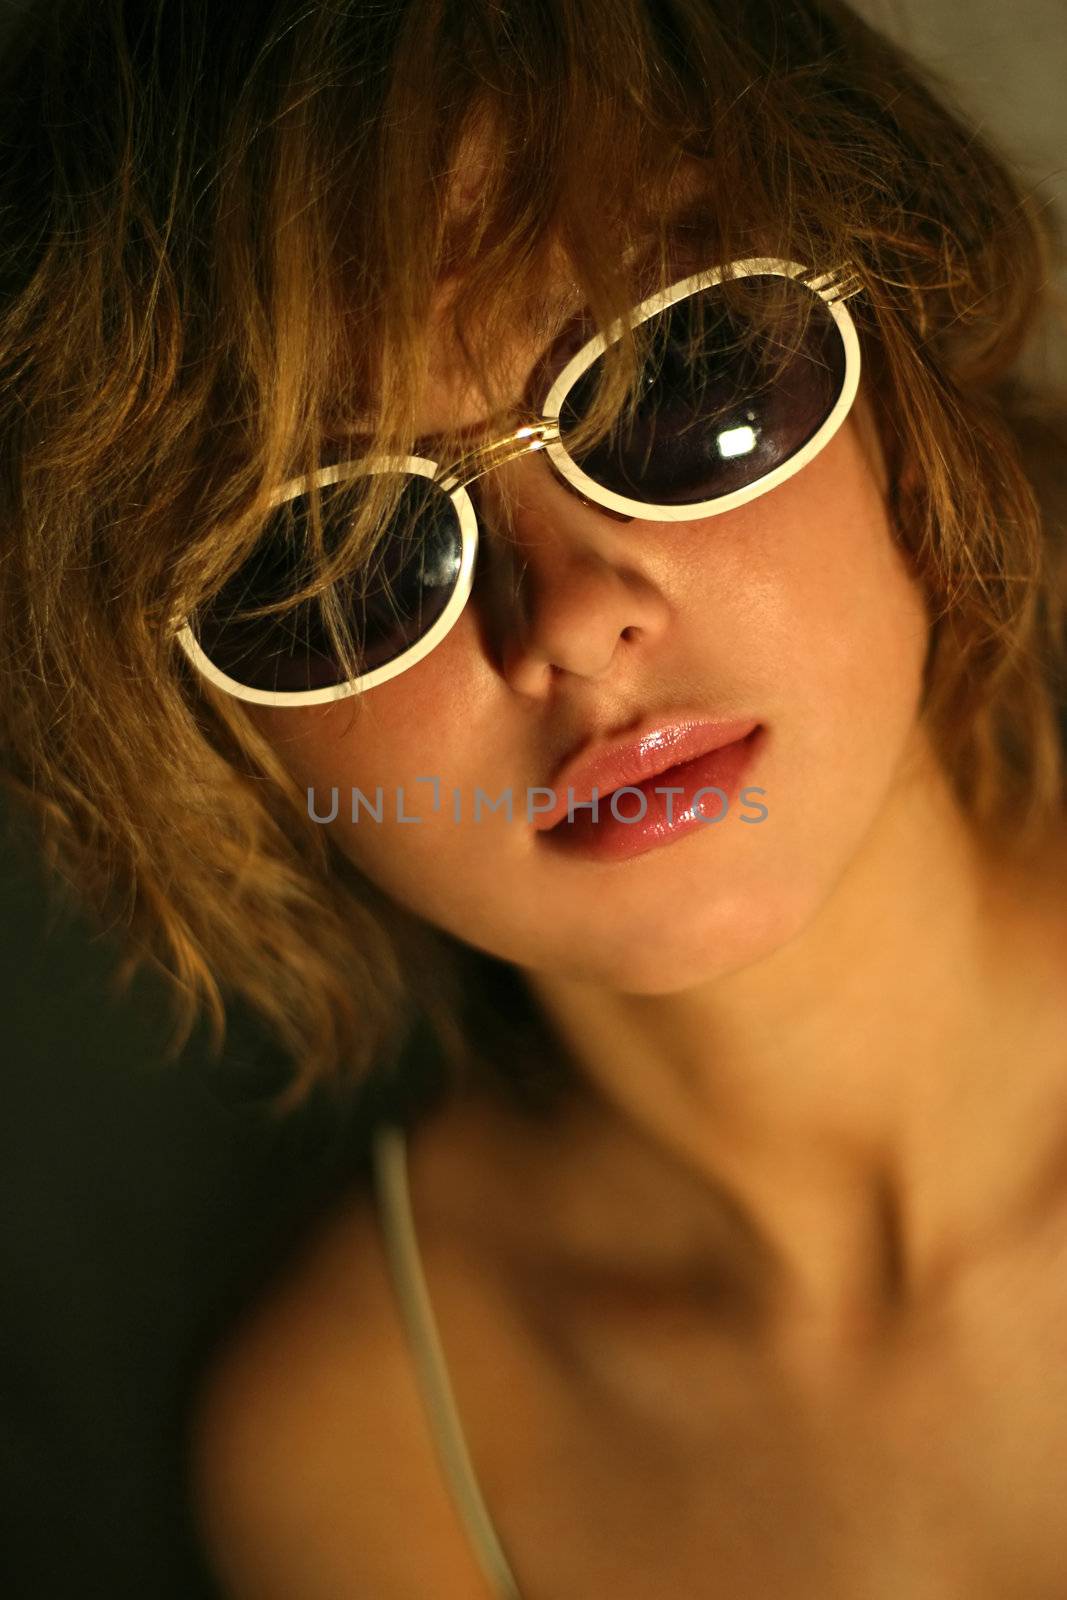 The attractive girl in solar glasses